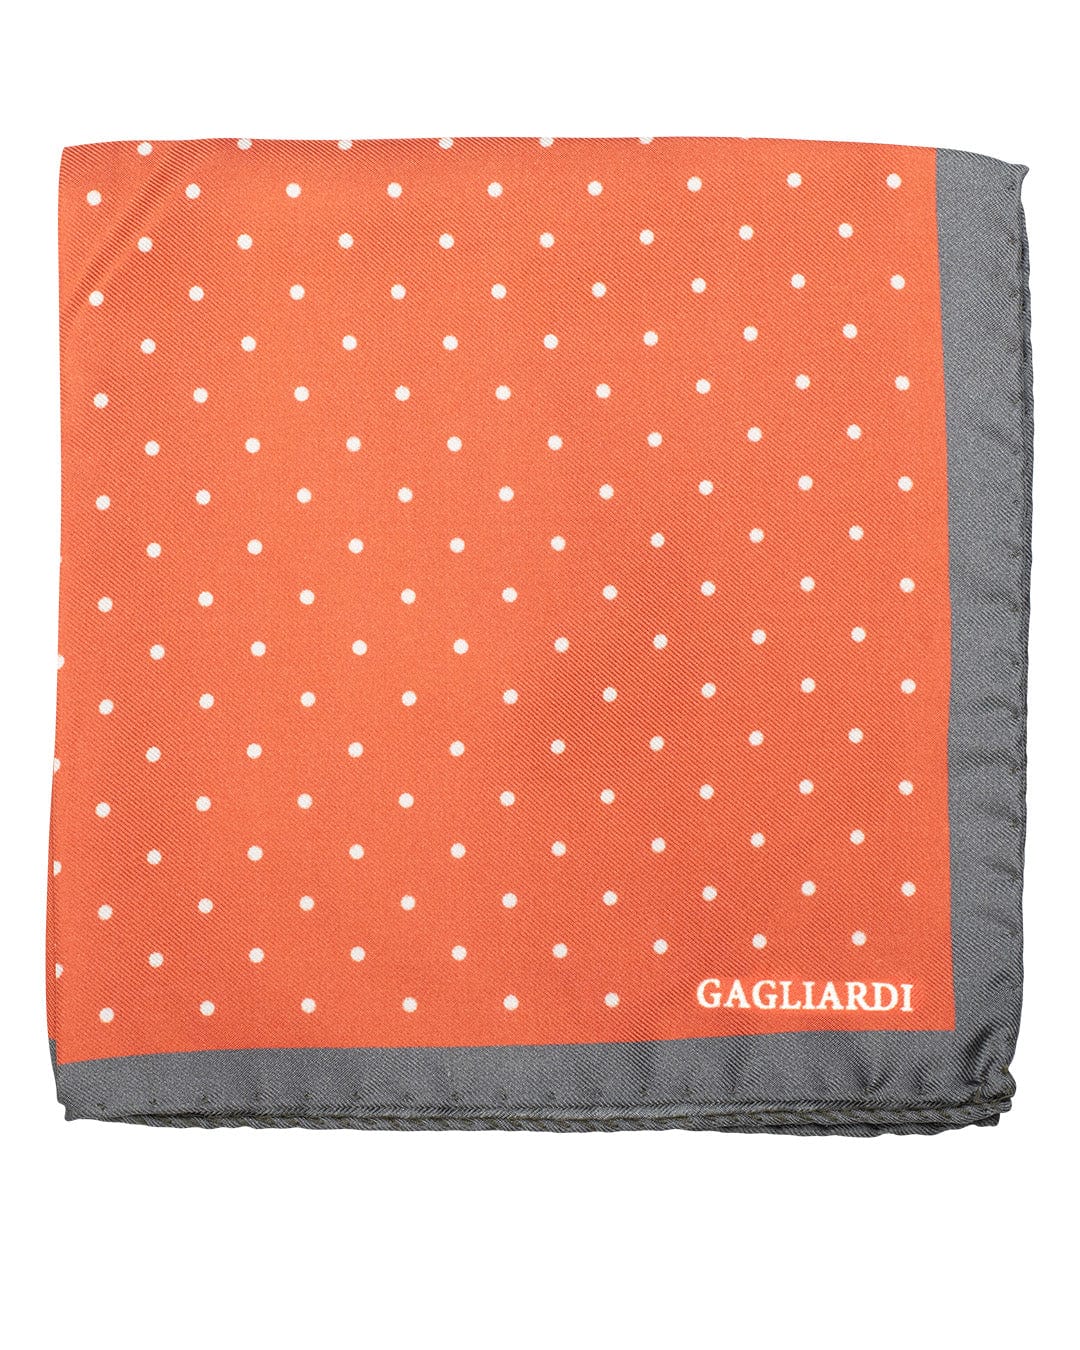 Gagliardi Pocket Squares ONE Gagliardi Orange Polka Dot Print Italian Silk Pocket Square